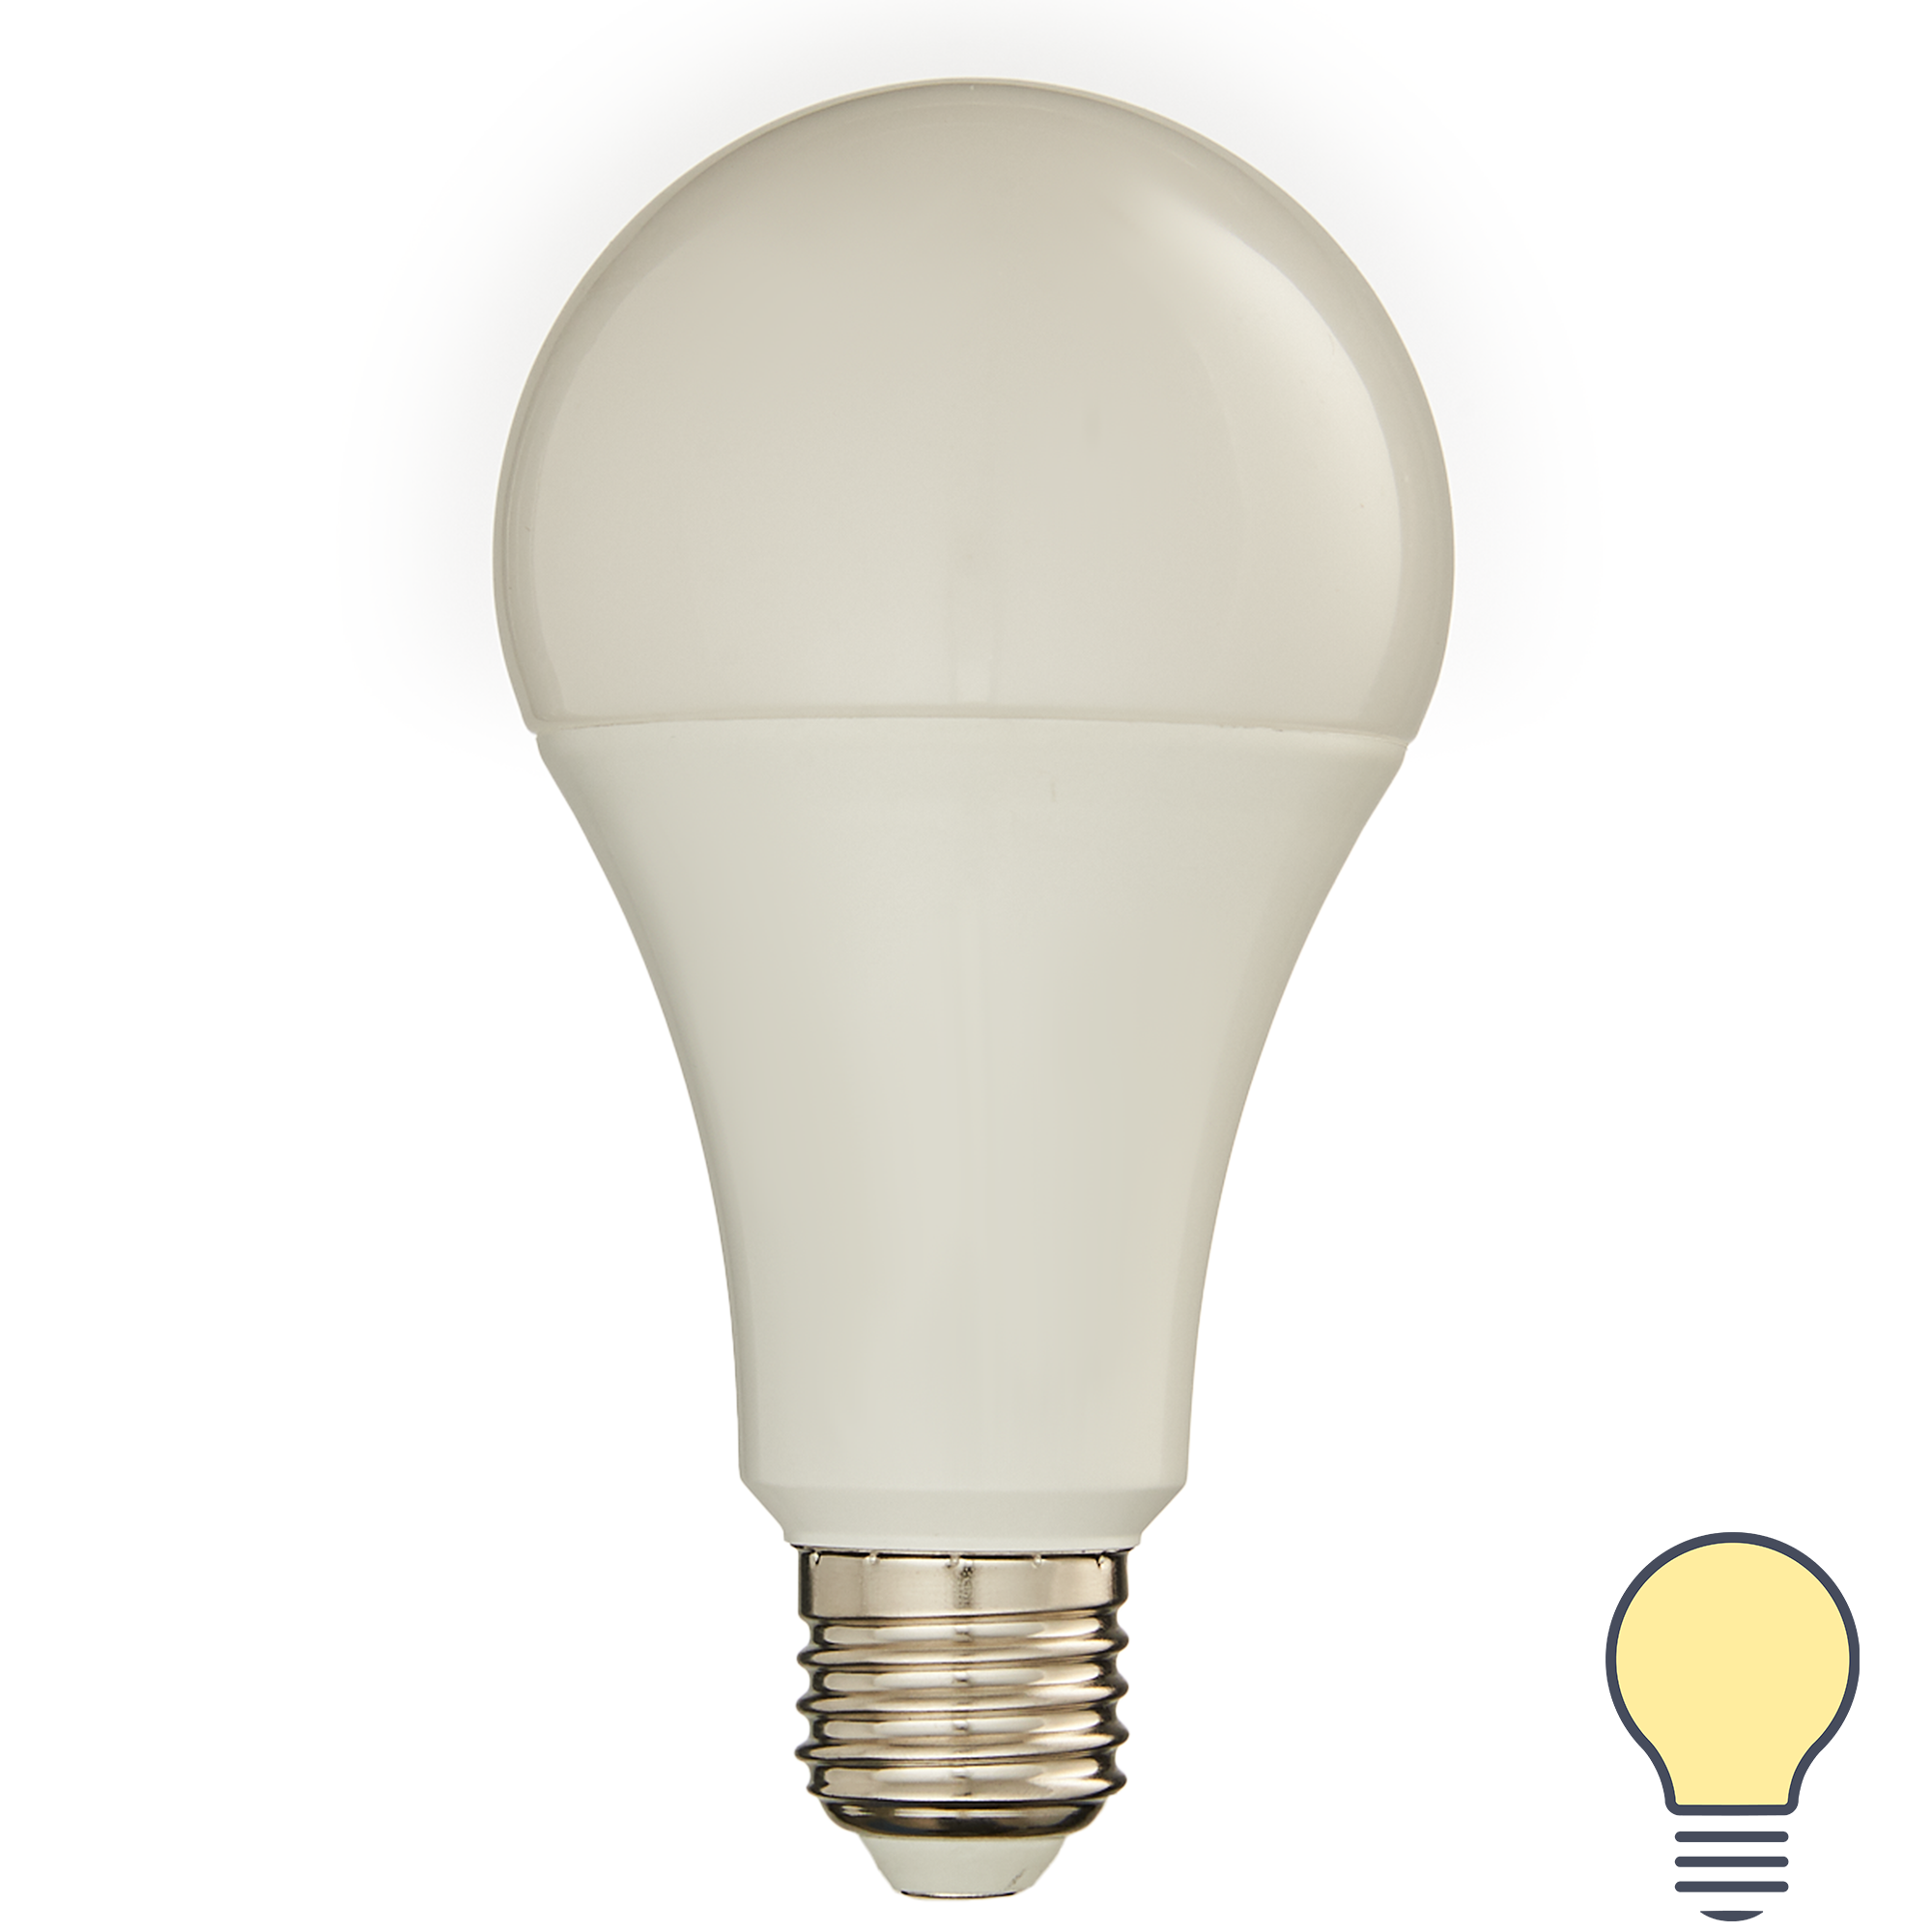 89143903 Лампа умная светодиодная Wi-Fi Osram Smart Plus E27 220-240 В 14 Вт груша матовая 1521 лм, теплый белый свет STLM-0079044 LEDVANCE